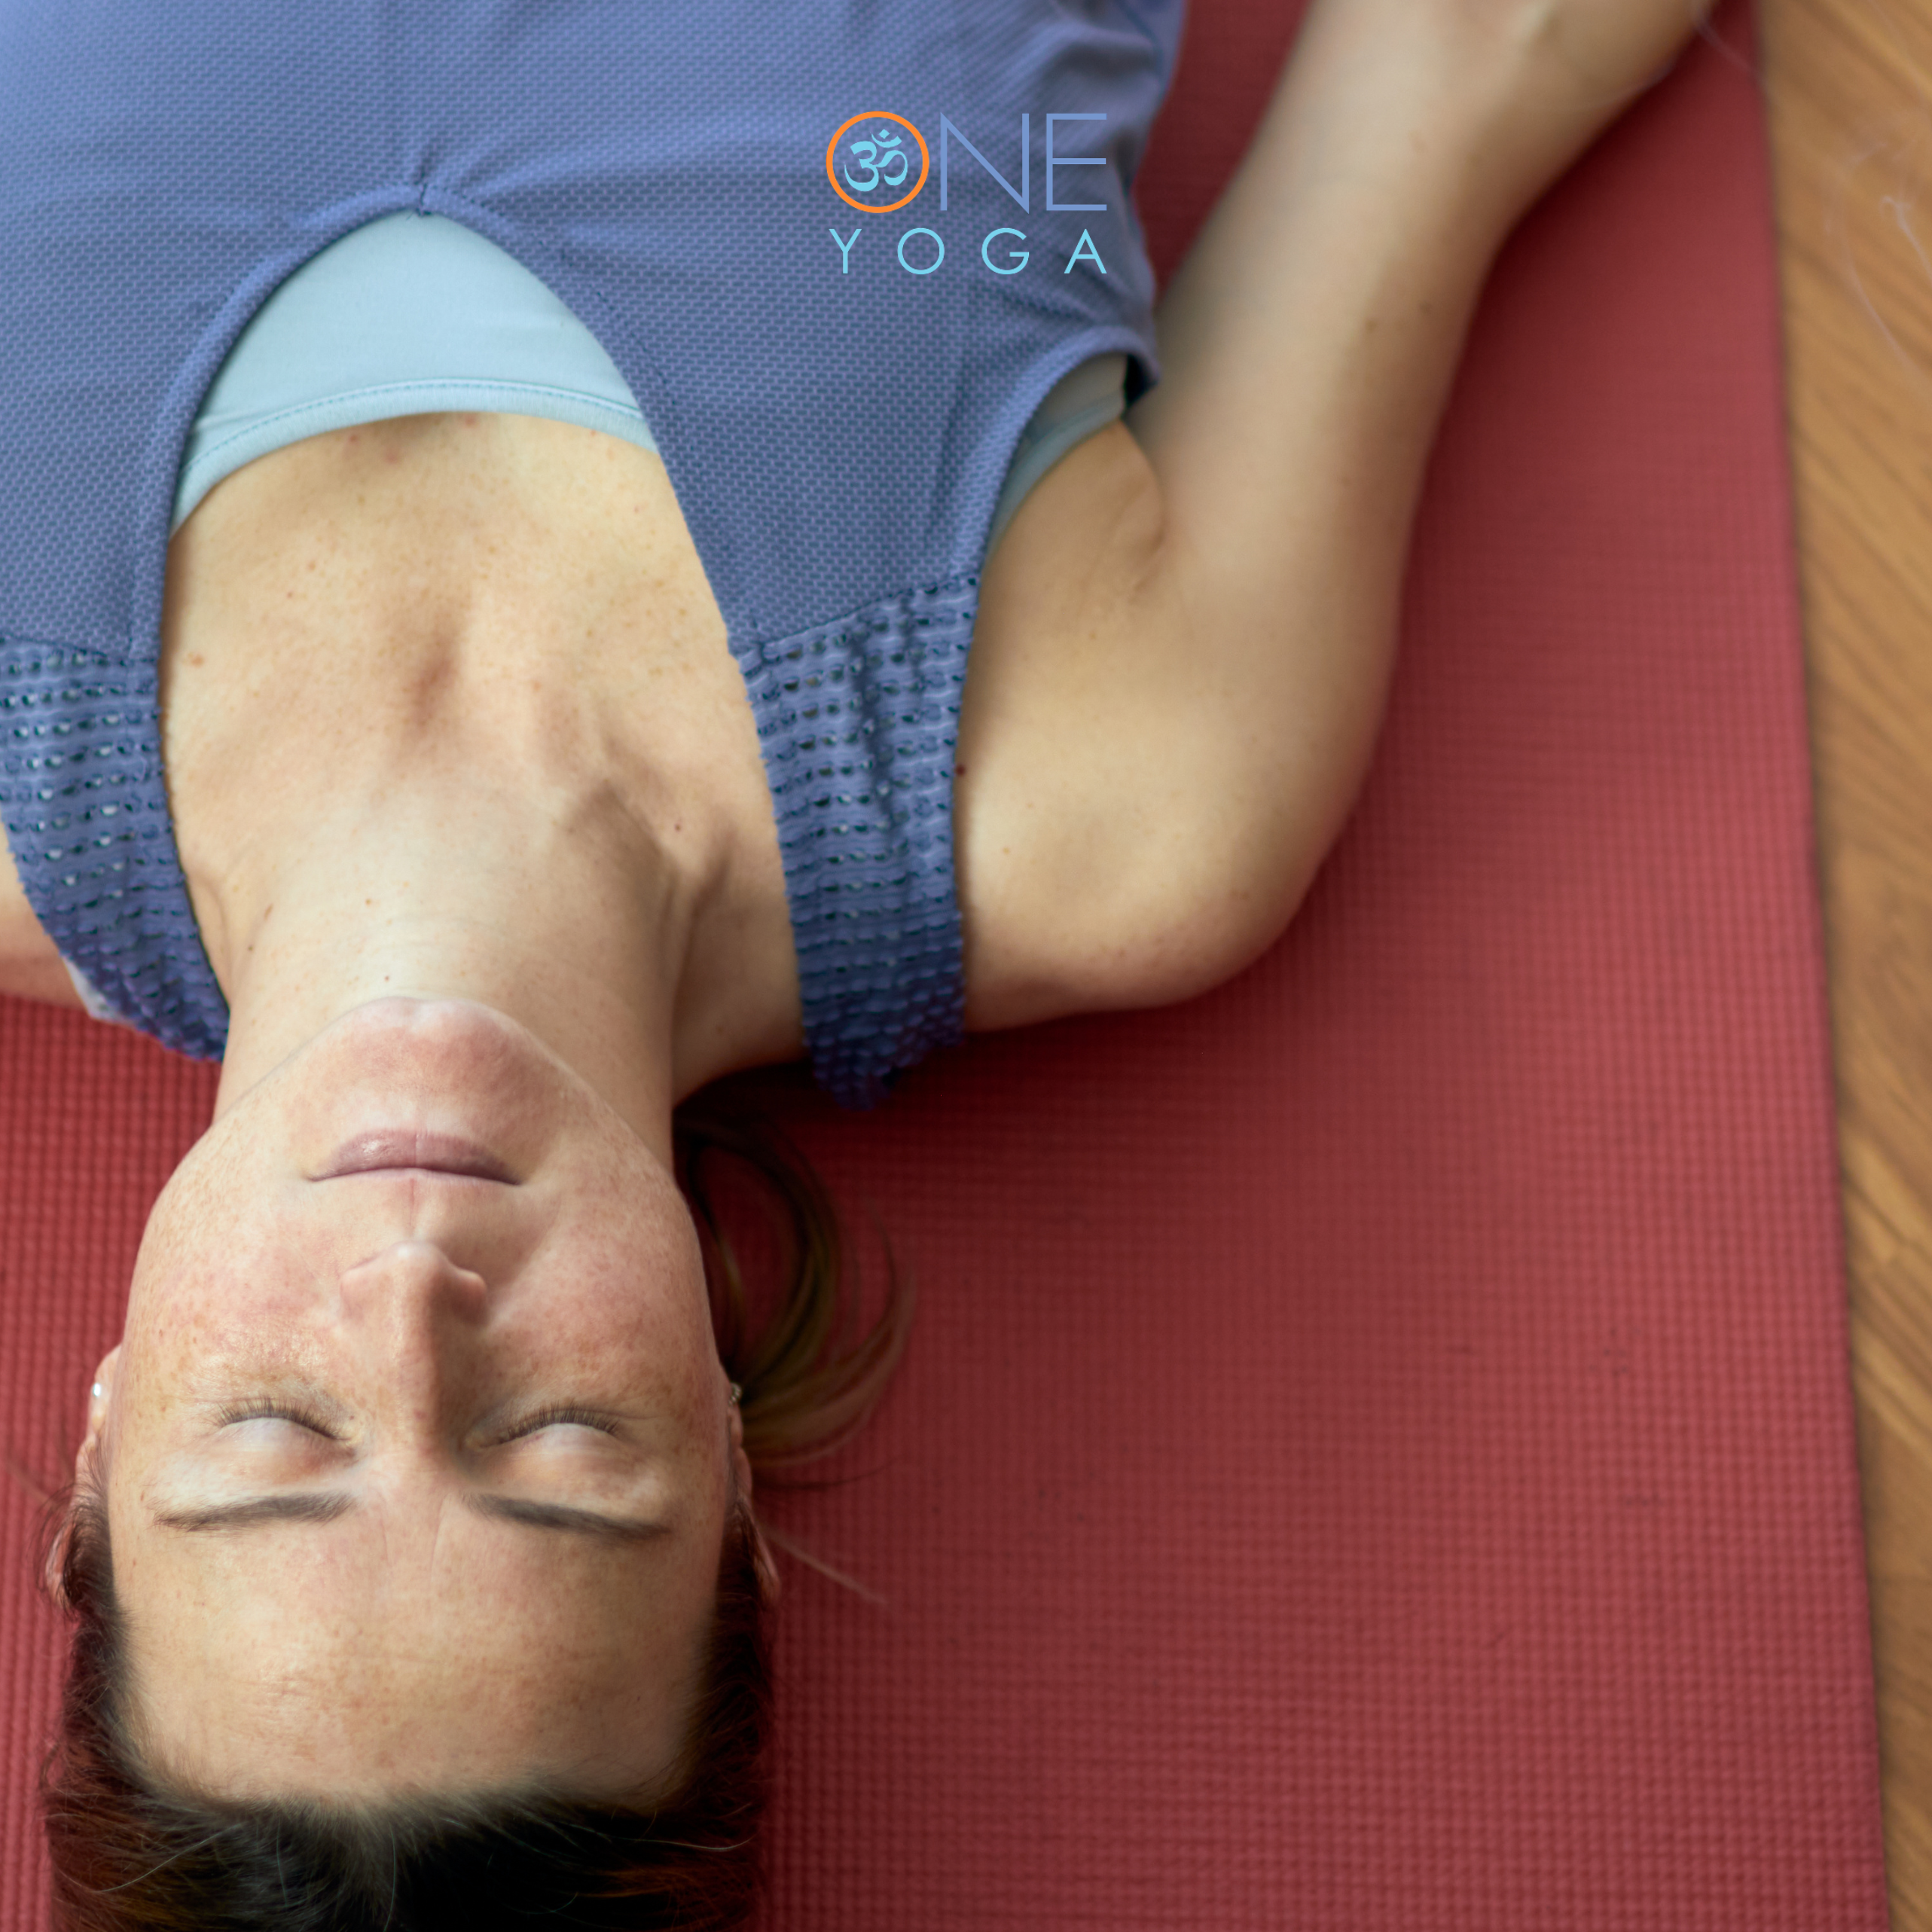 yoga nidra practice on the mat